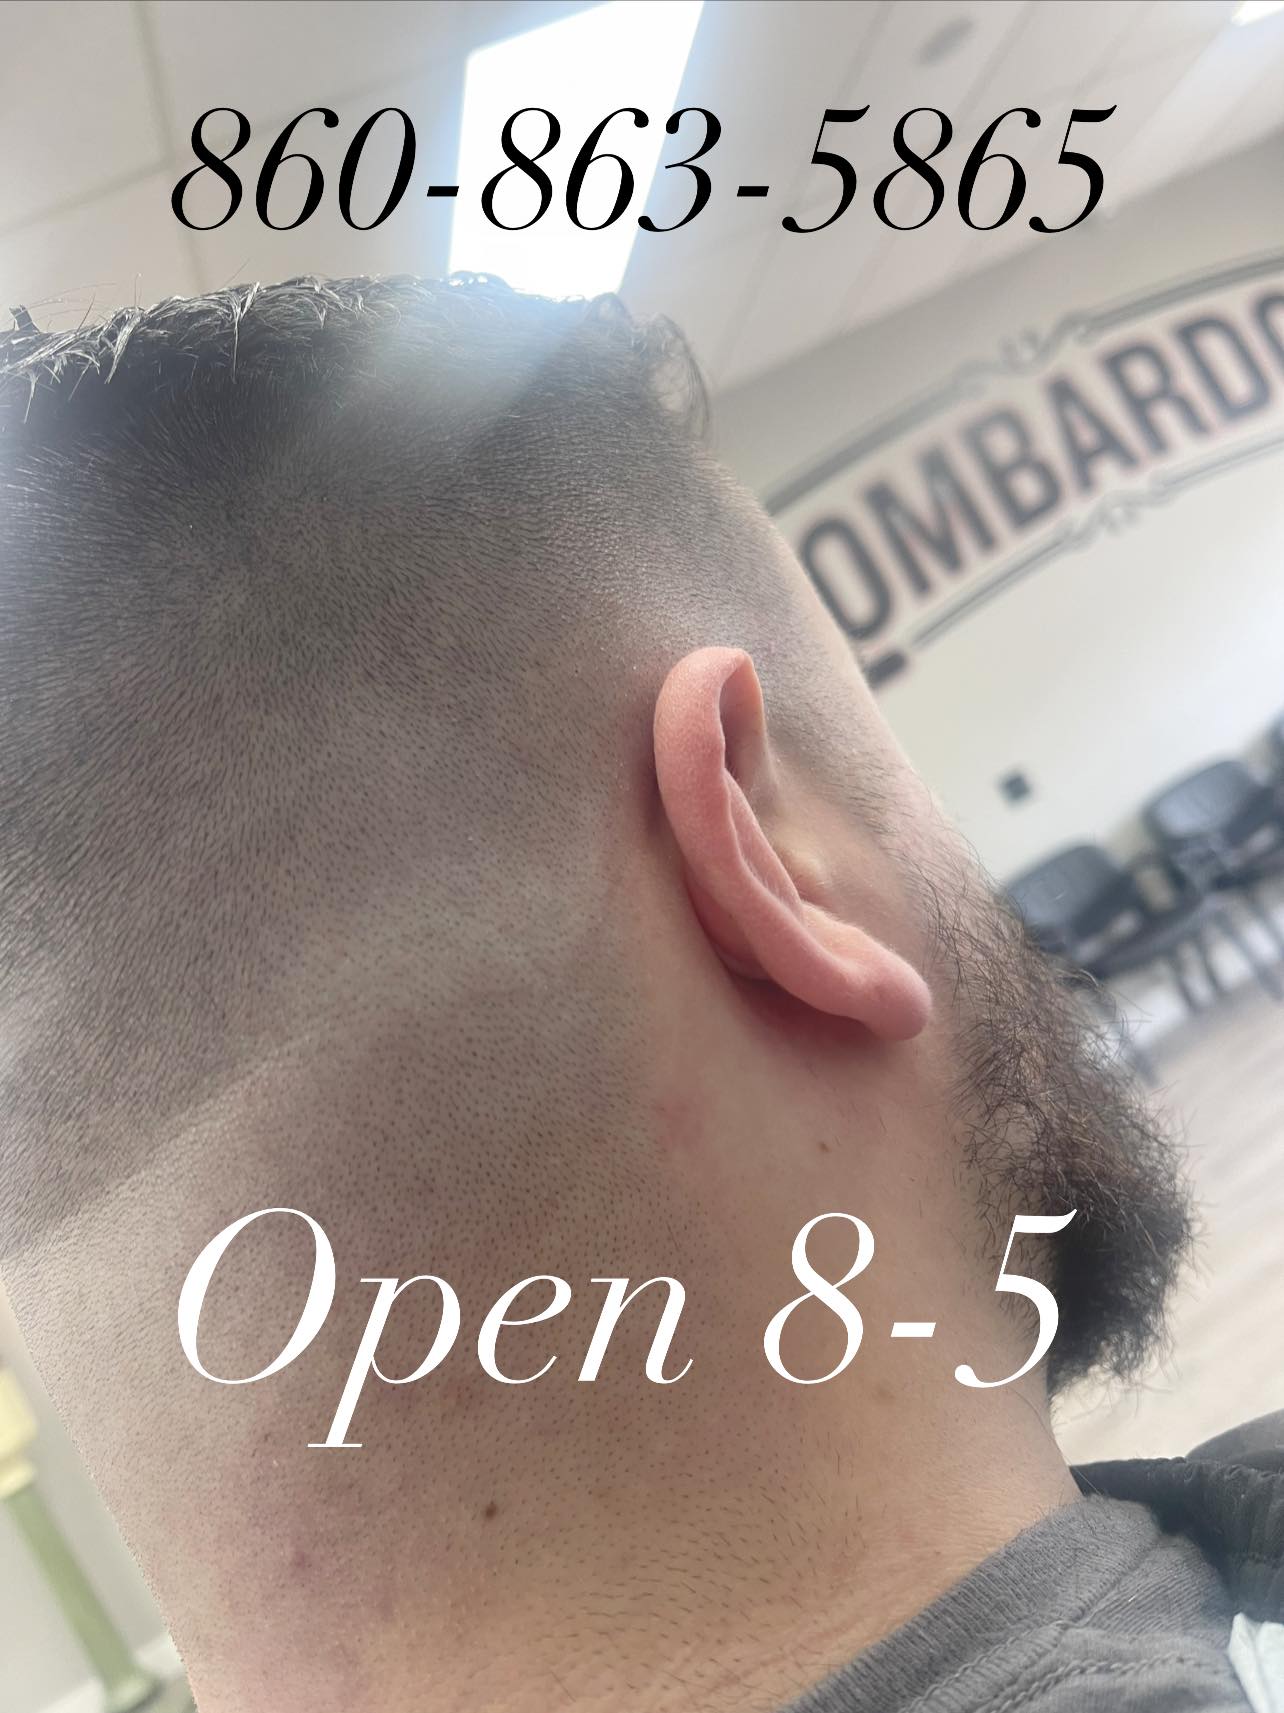 Lombardo's Barber Shop 1201 Meriden-Waterbury Turnpike, Plantsville Connecticut 06479